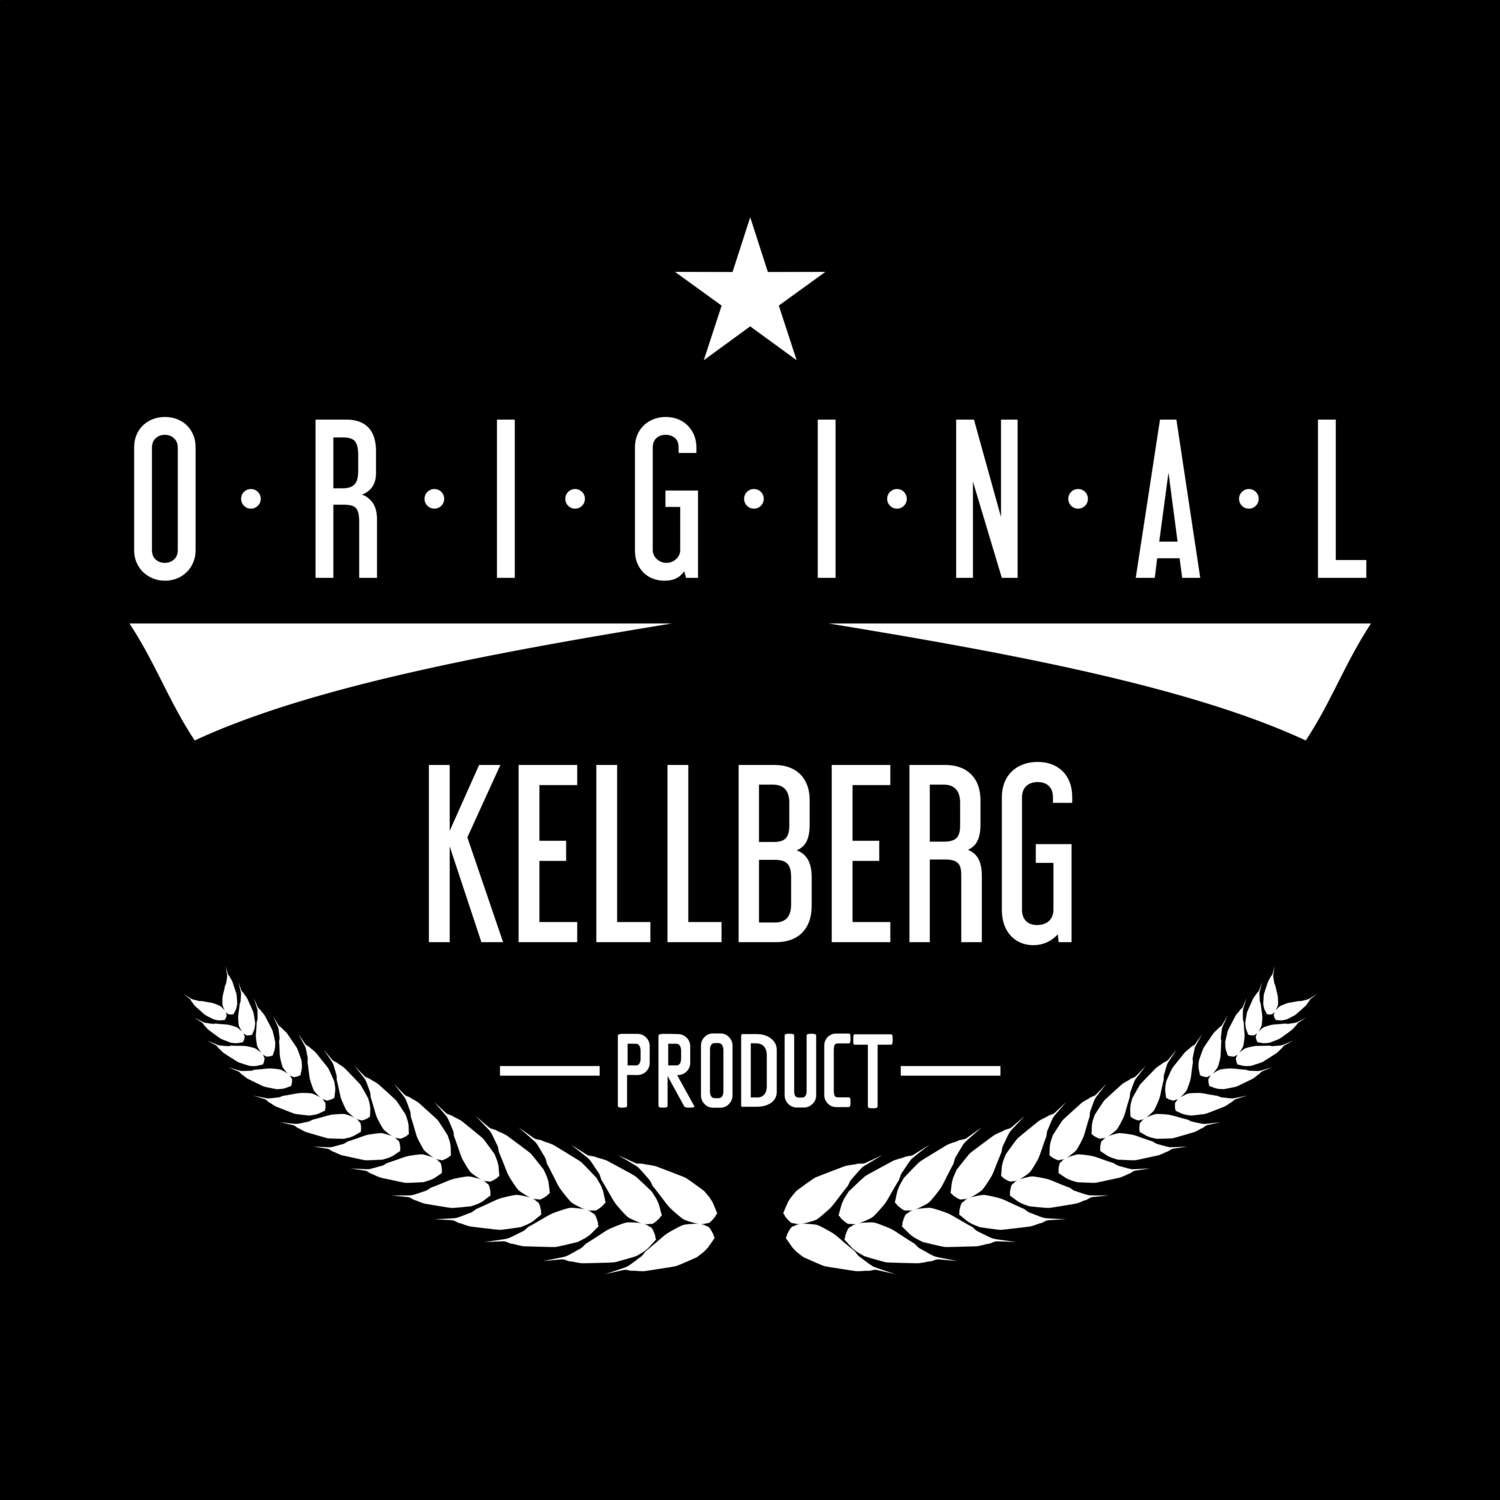 Kellberg T-Shirt »Original Product«